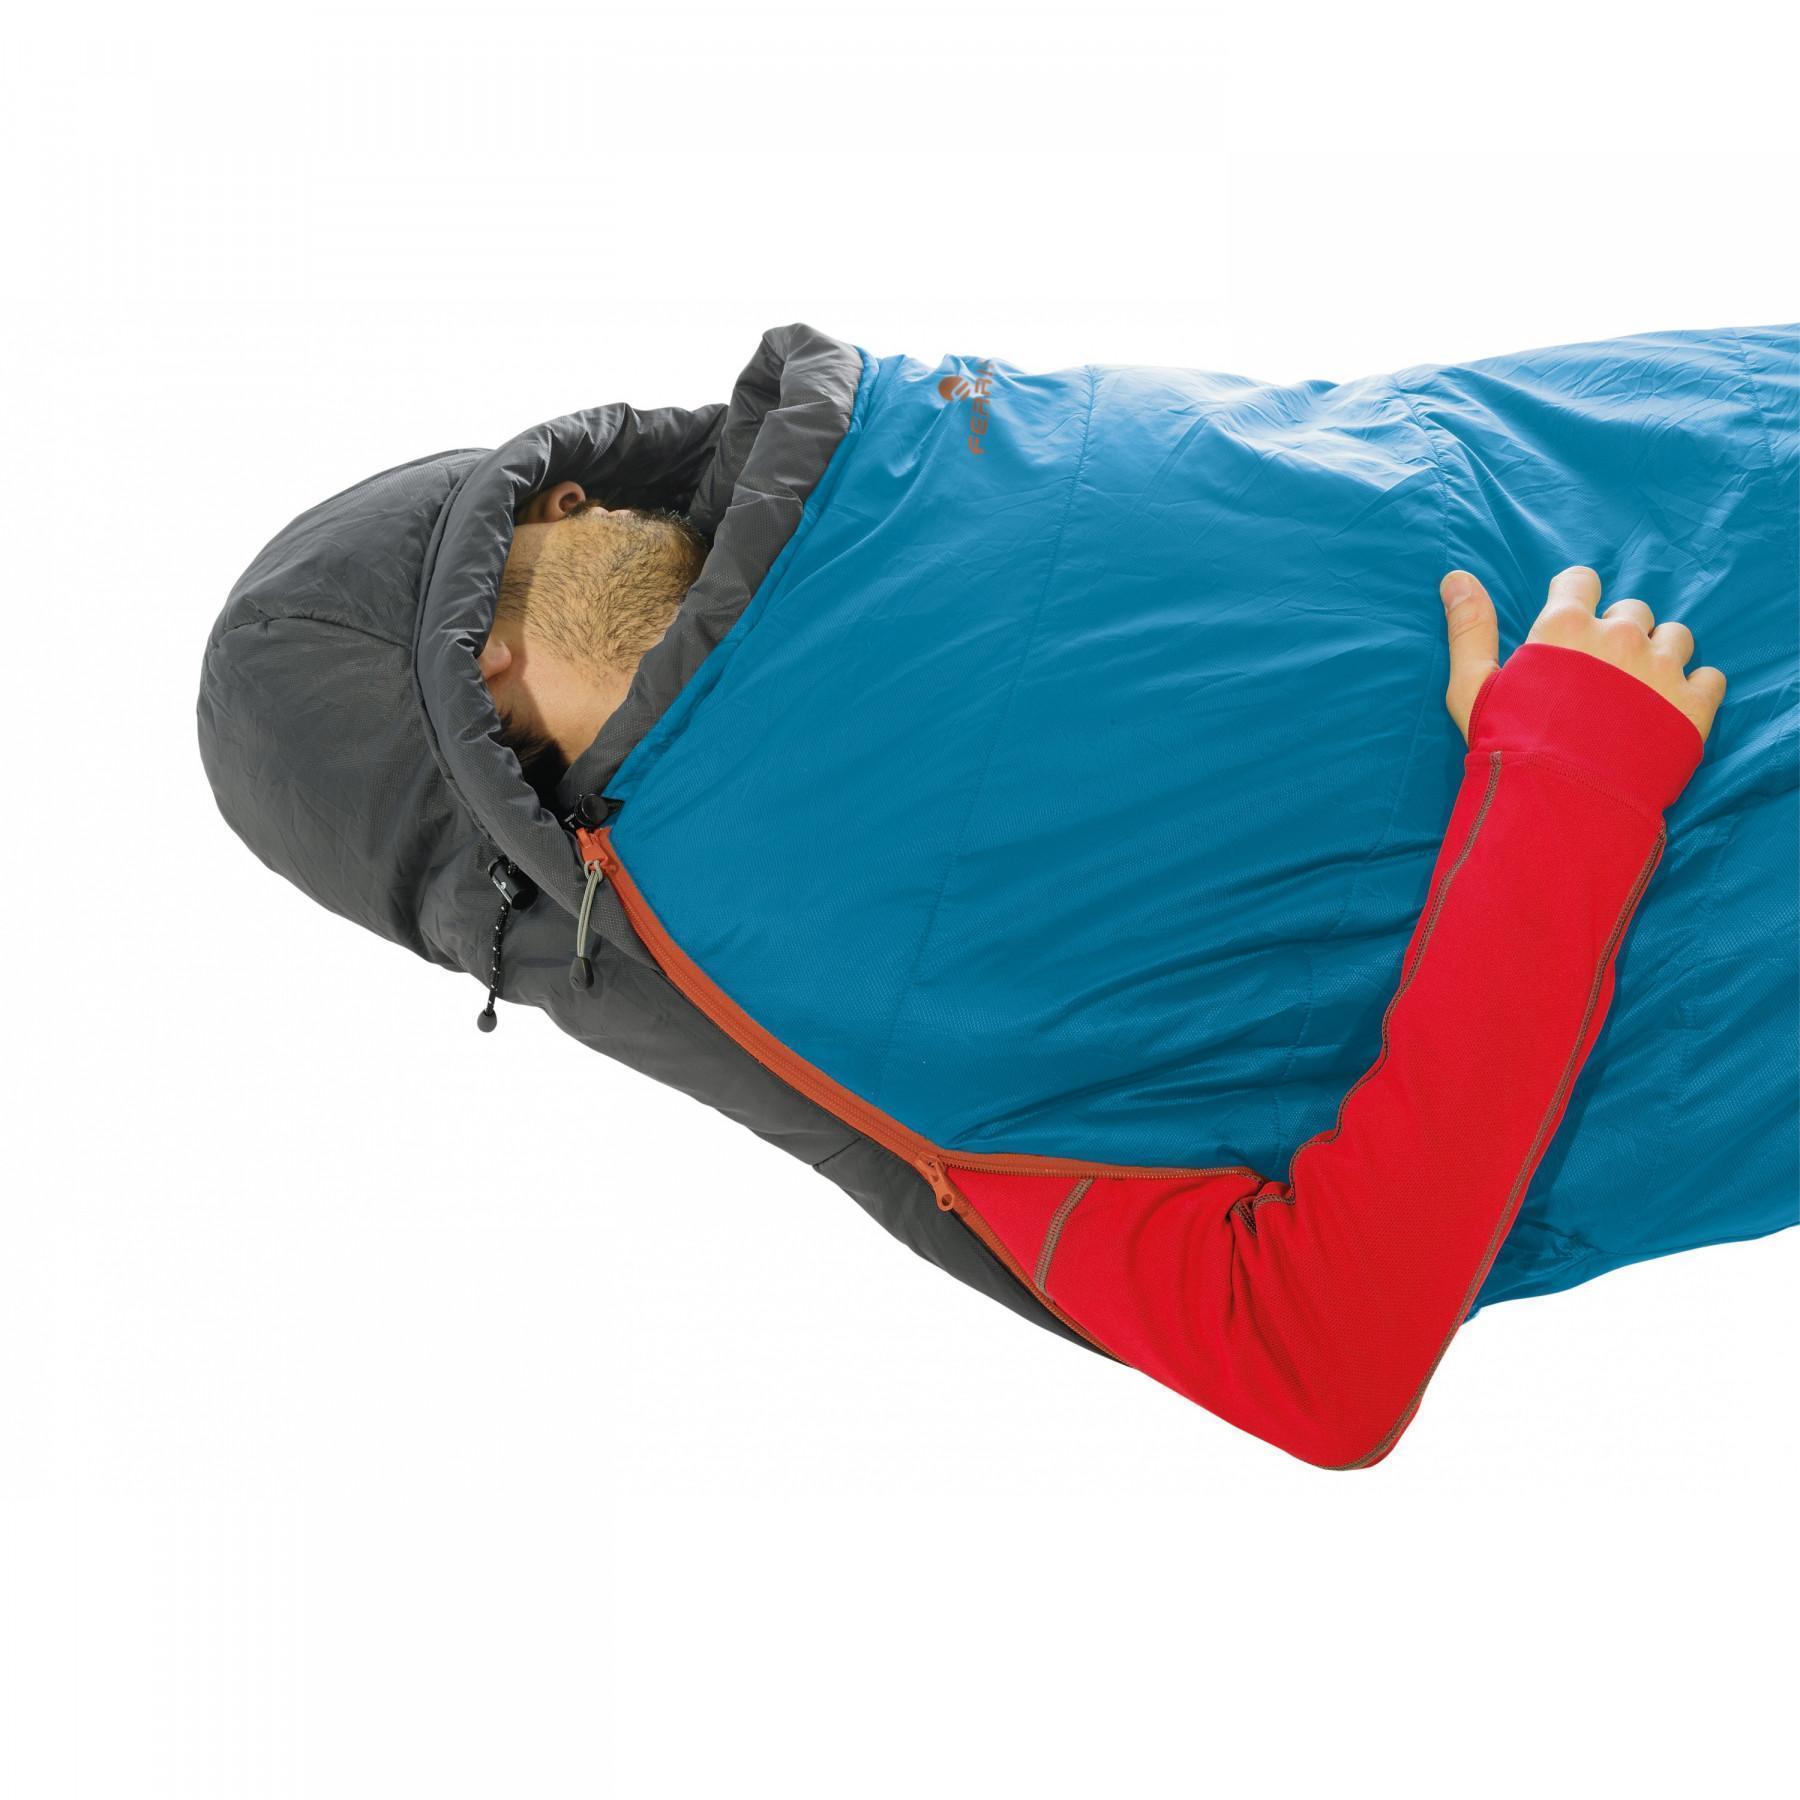 Sleeping bag Ferrino nightec lite pro 600 m